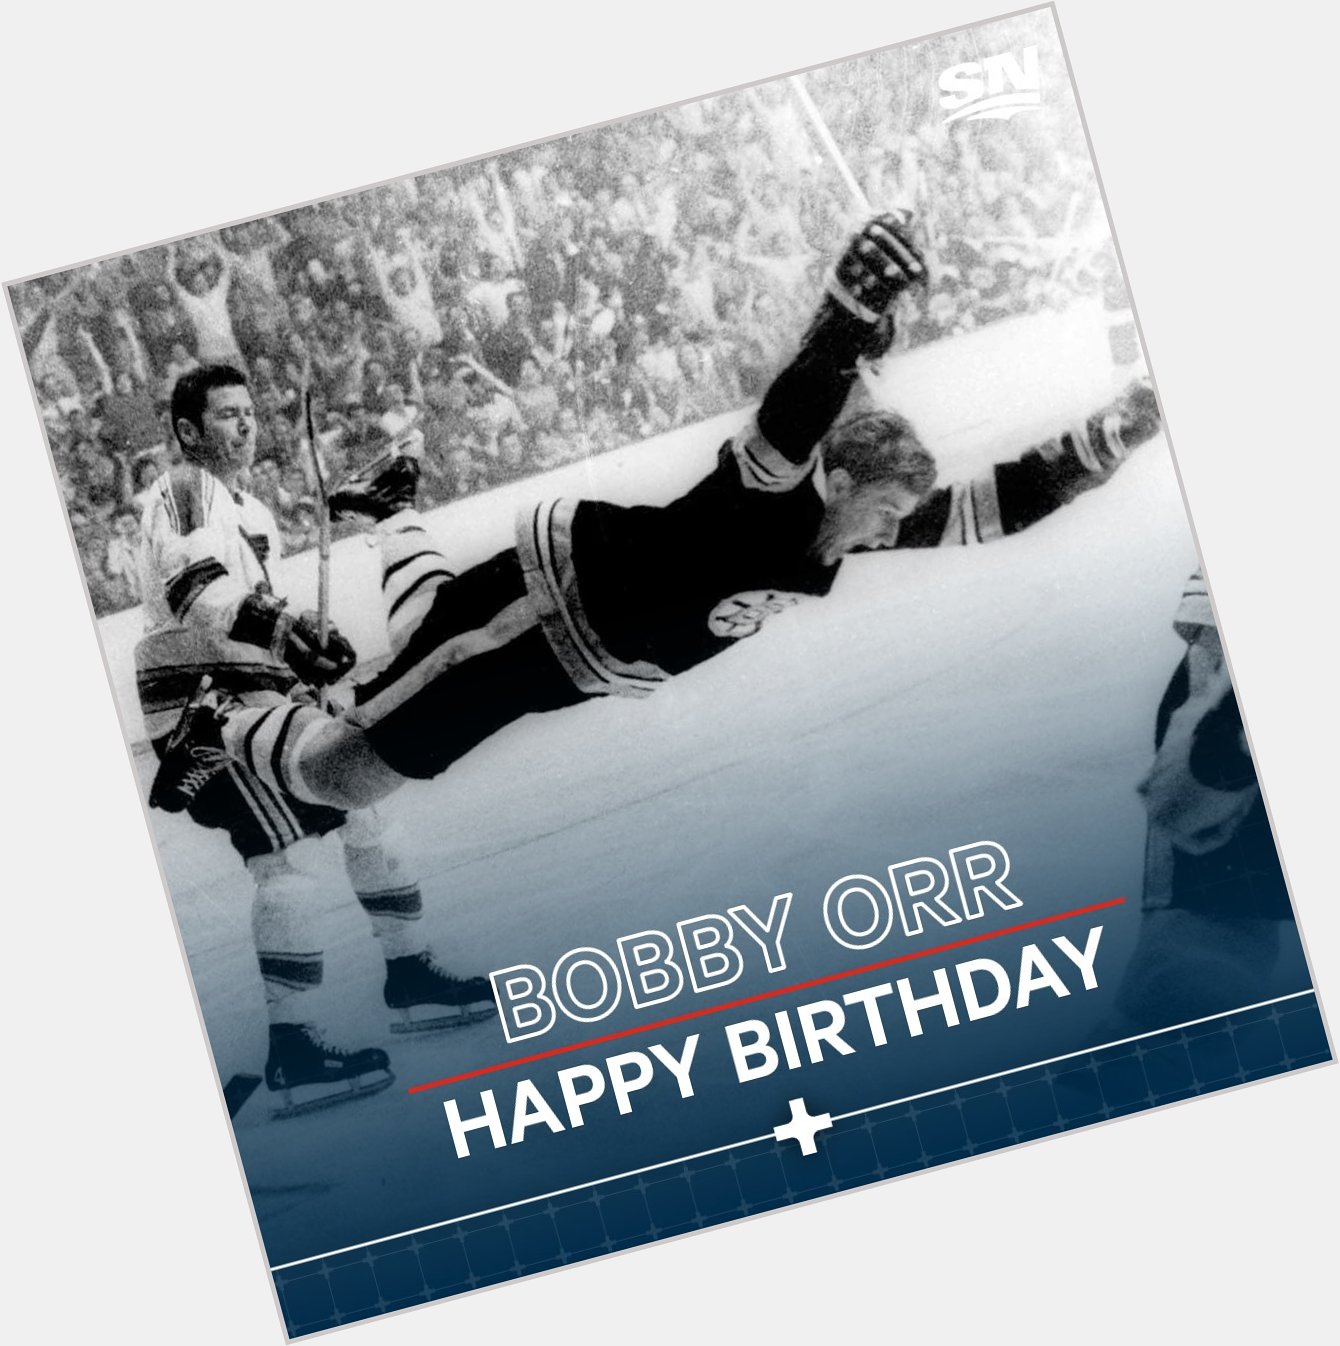 Happy 7  0  th birthday to the legendary Bobby Orr! 